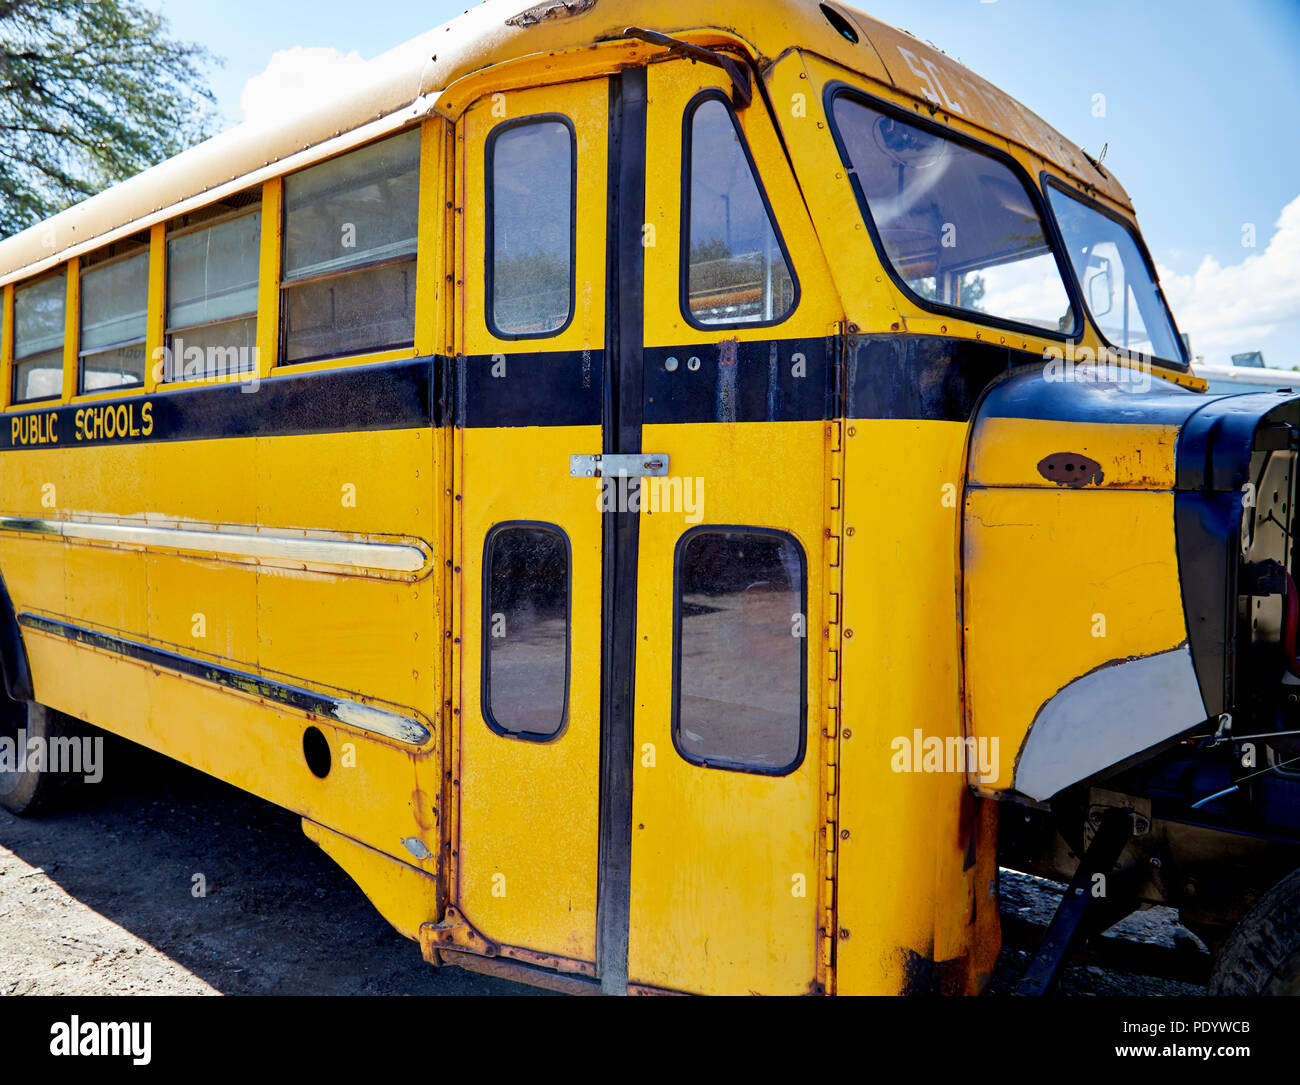 A junked public school bus no longer in use Stock Photo